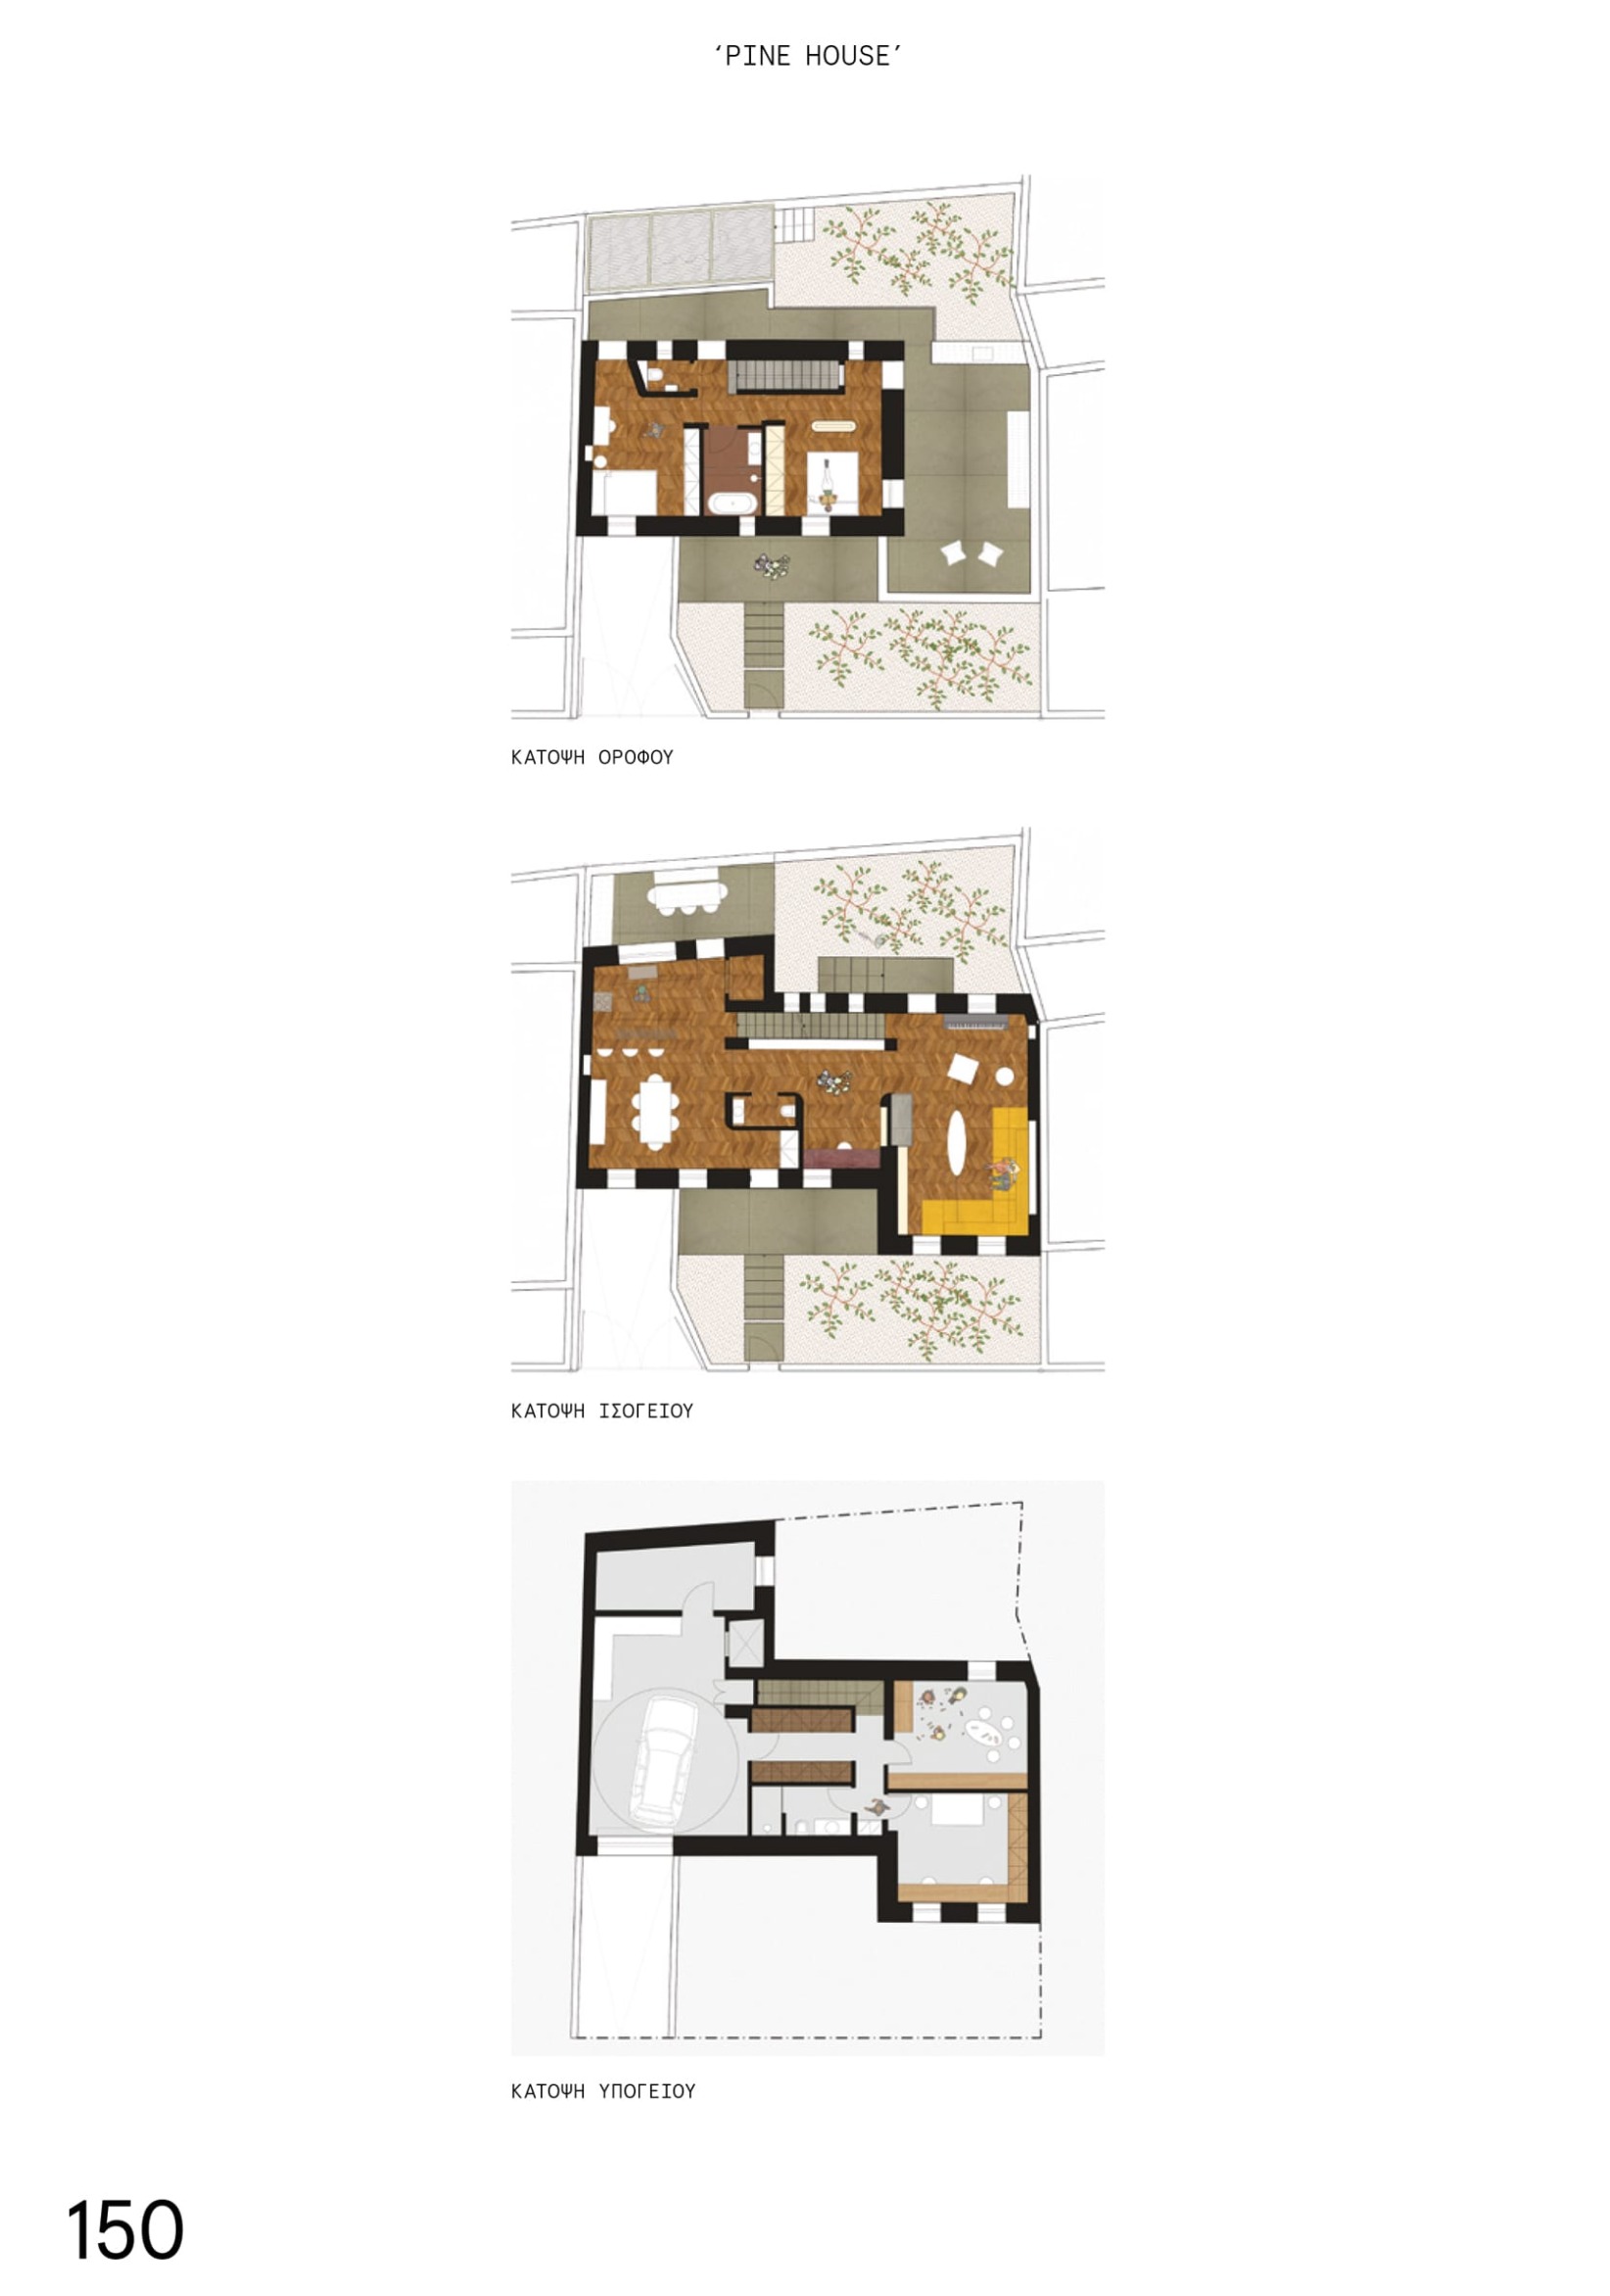 domes-169-pine-house-evripiotis-architects-P05-1